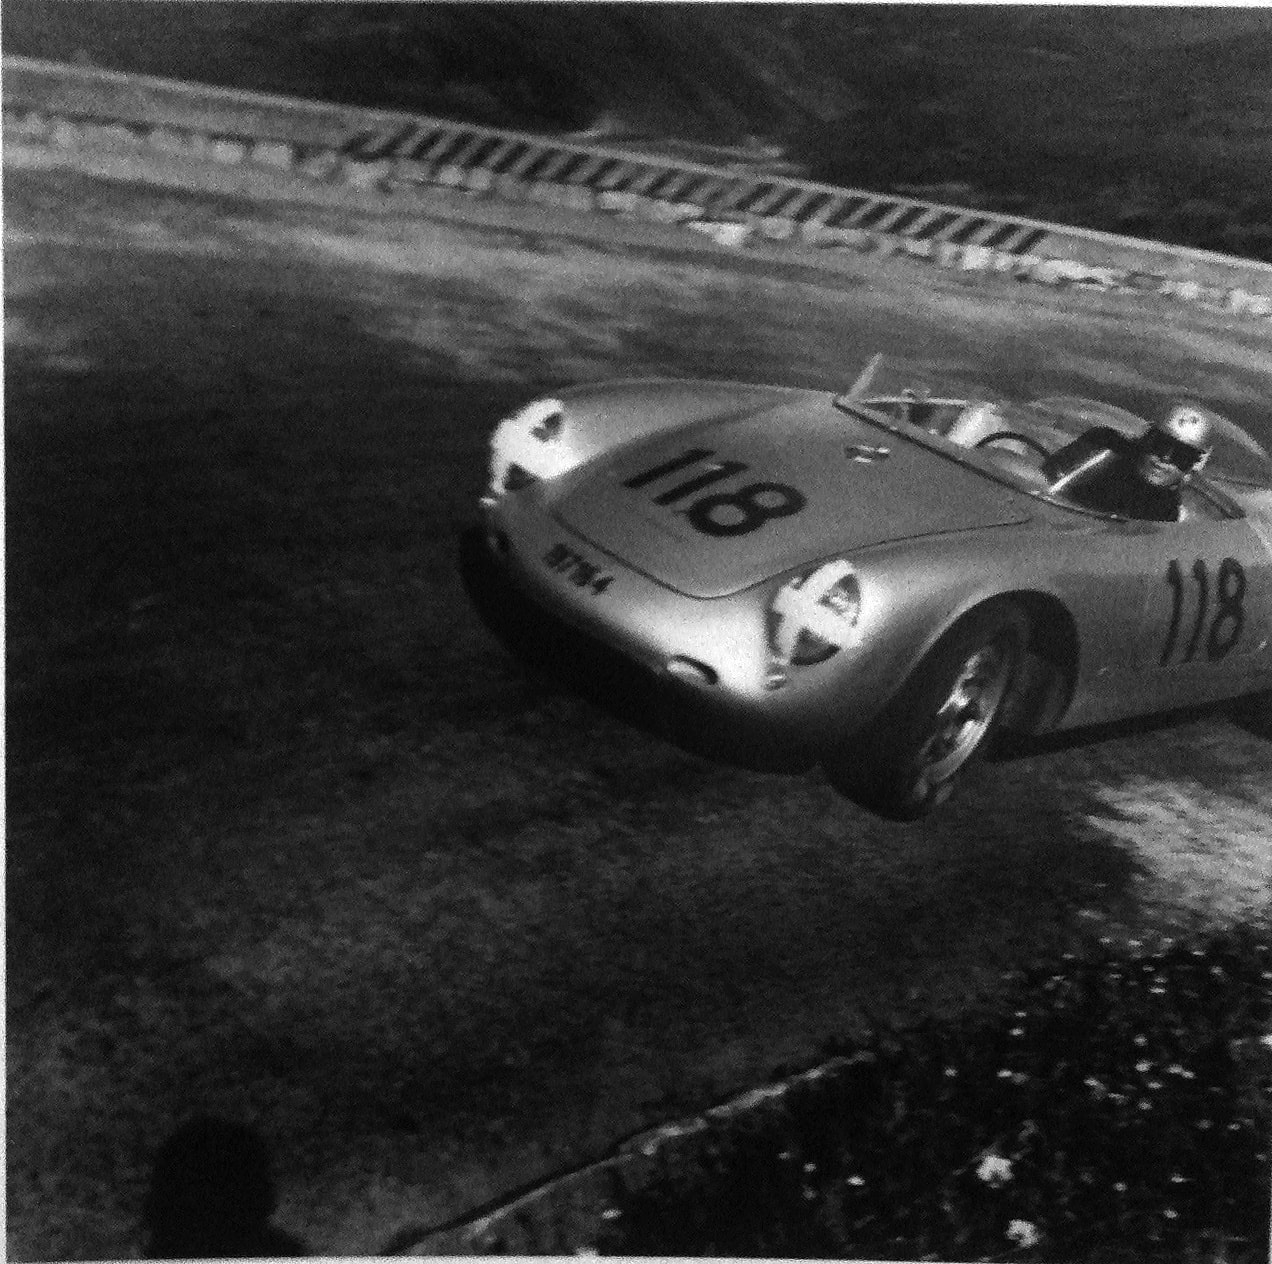 Jesse Alexander, Herbert Linge Porsche RSK, Targa Florio, Sicily, Italy, 1959